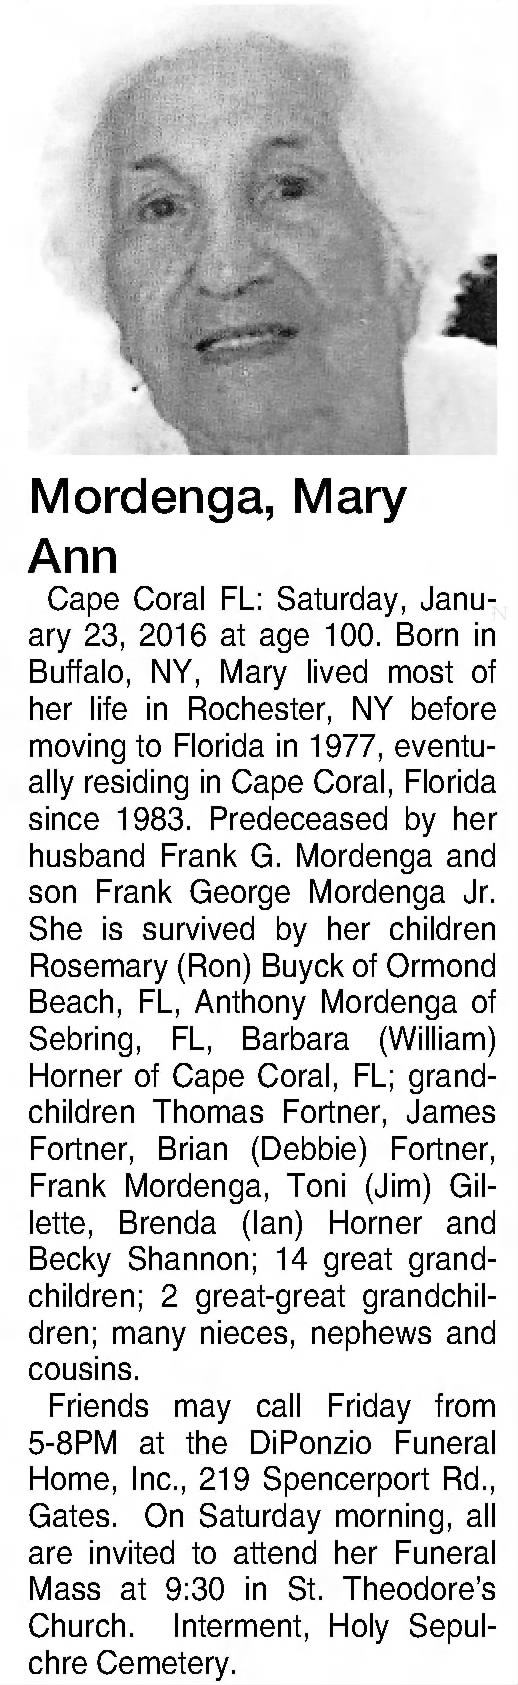 Mary Ann Mordenga obituary